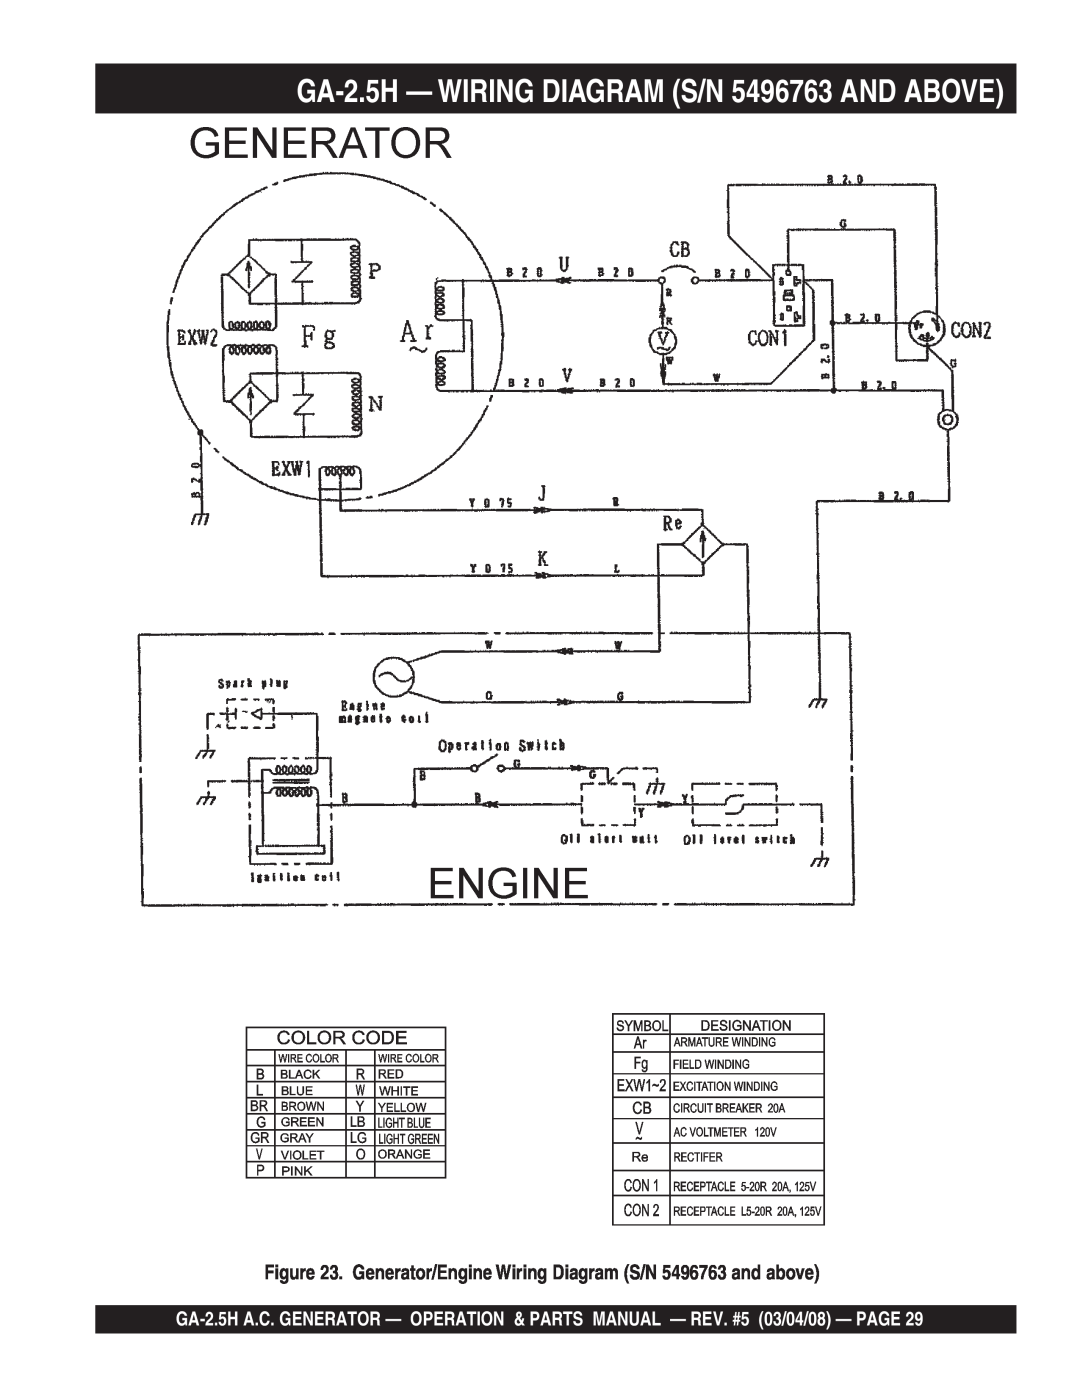 Multiquip manual GA-2.5H - WIRING DIAGRAM S/N 5496763 AND ABOVE, Generator/Engine Wiring Diagram S/N 5496763 and above 